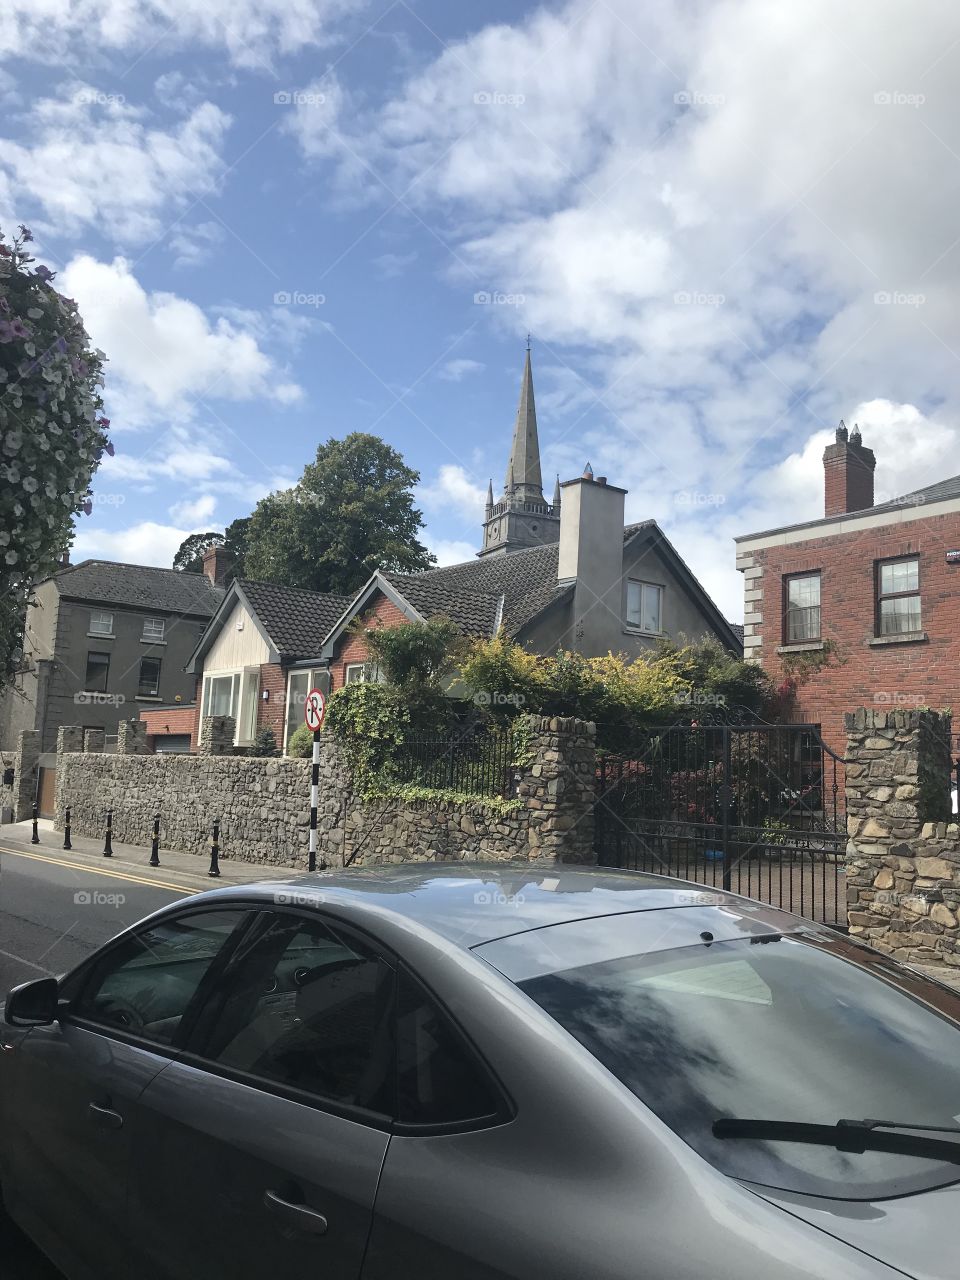 Streets of Drogheda, Ireland 